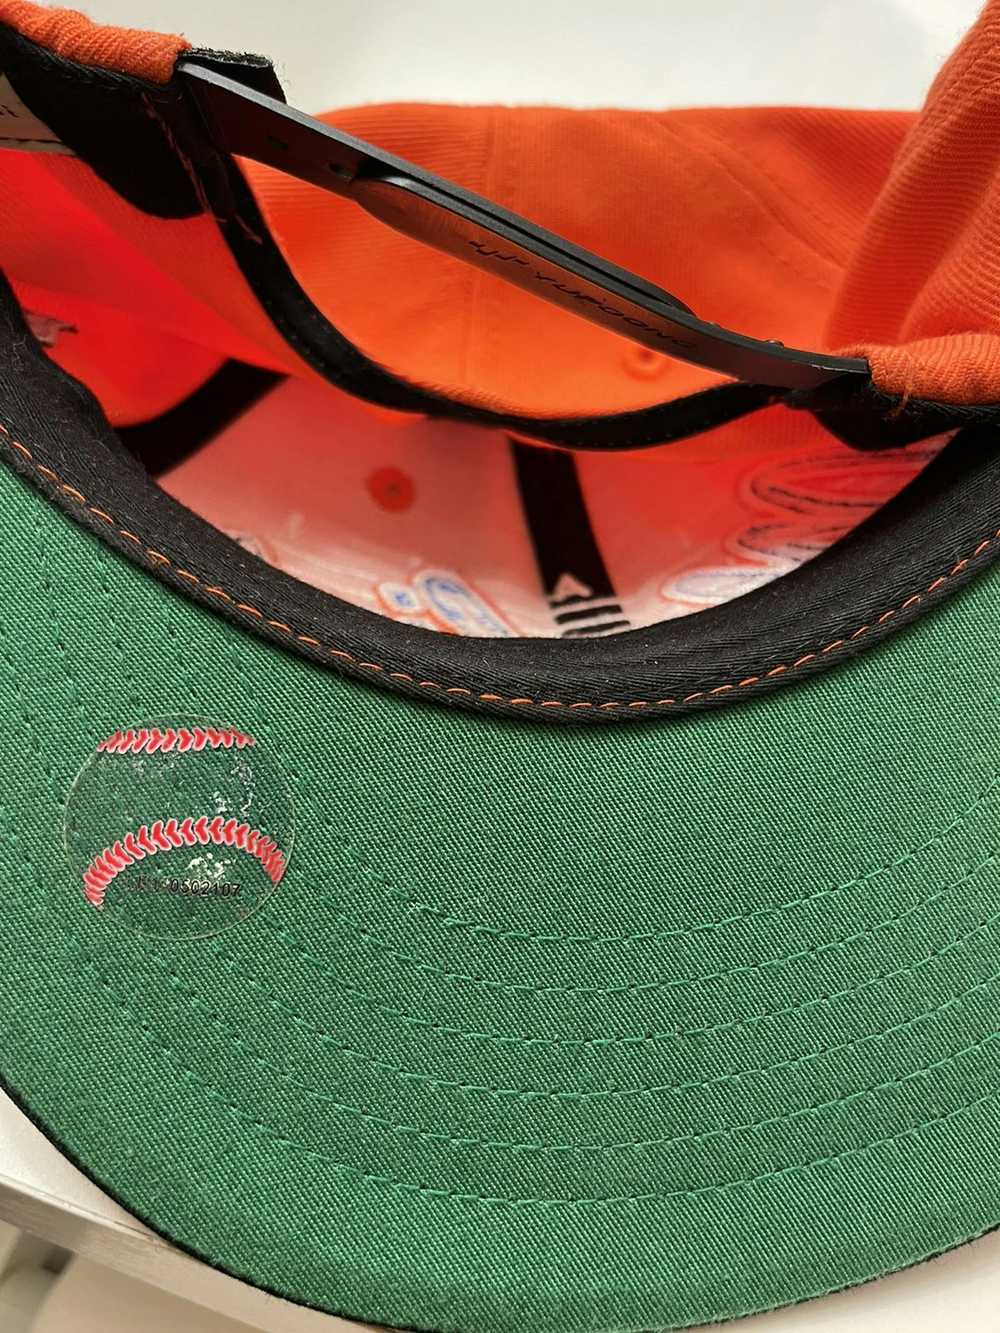 47 Brand Miami marlins SnapBack hat - image 4